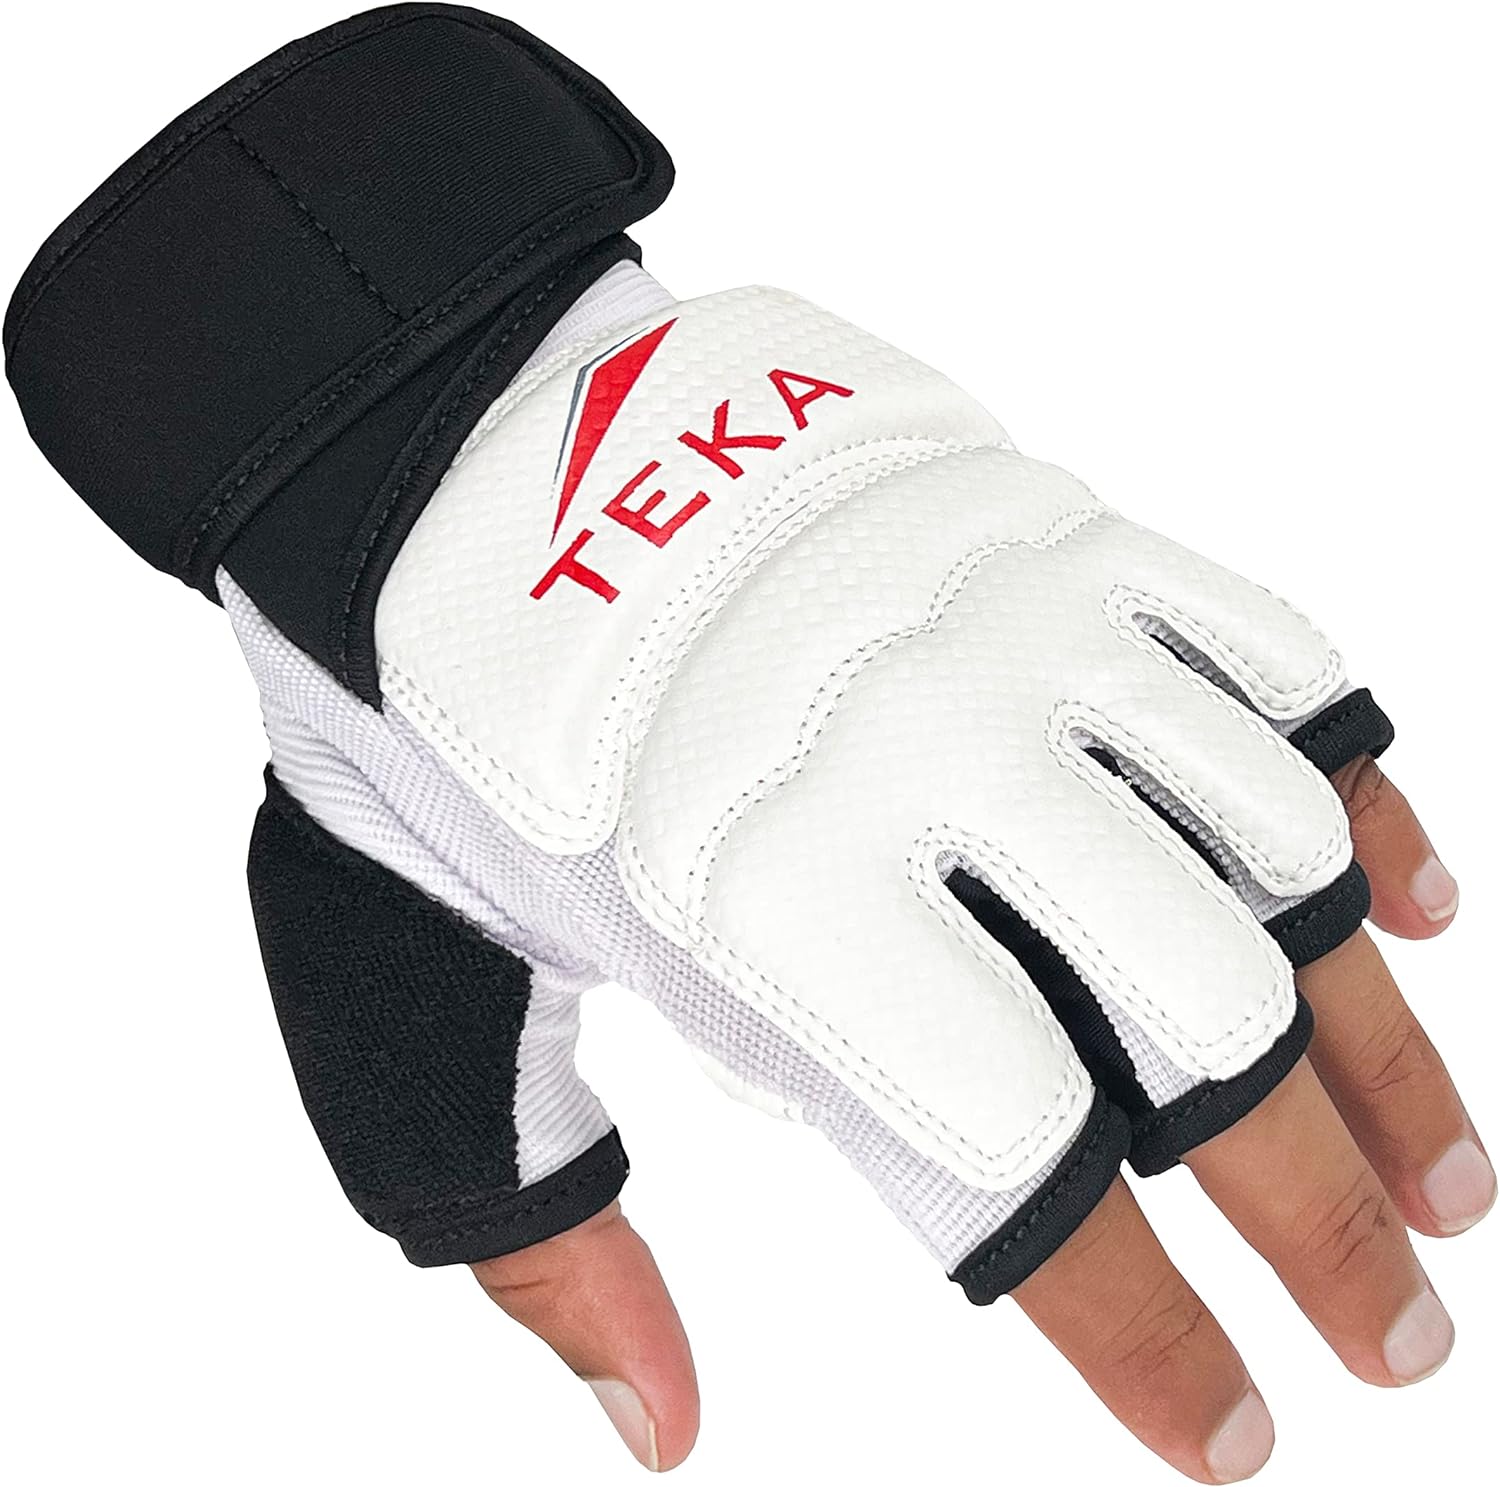 price-of-taekwondo-gloves